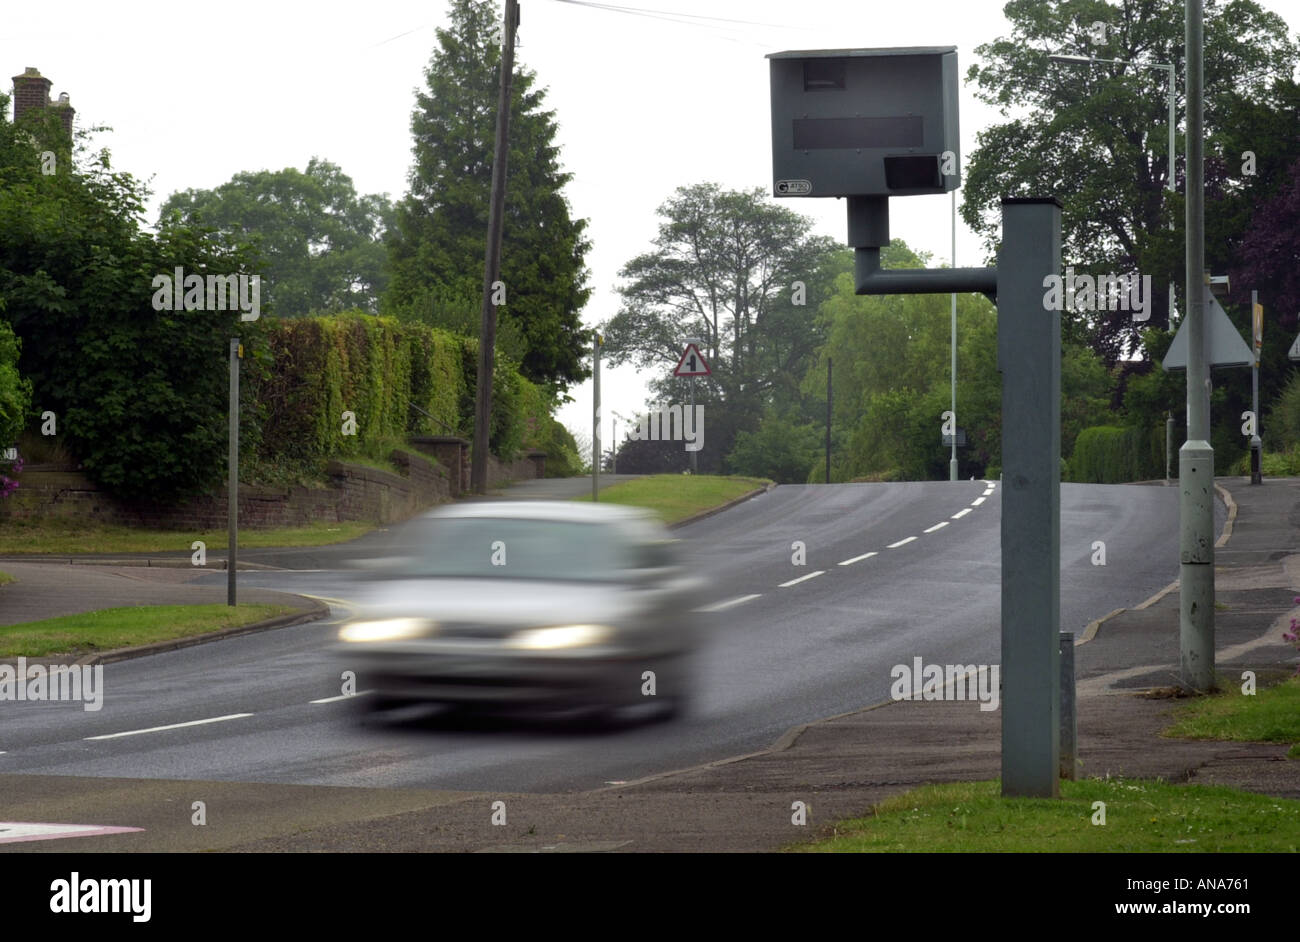 Gatso speed camera with car passing at speed Hertfordshire UK Stock Photo